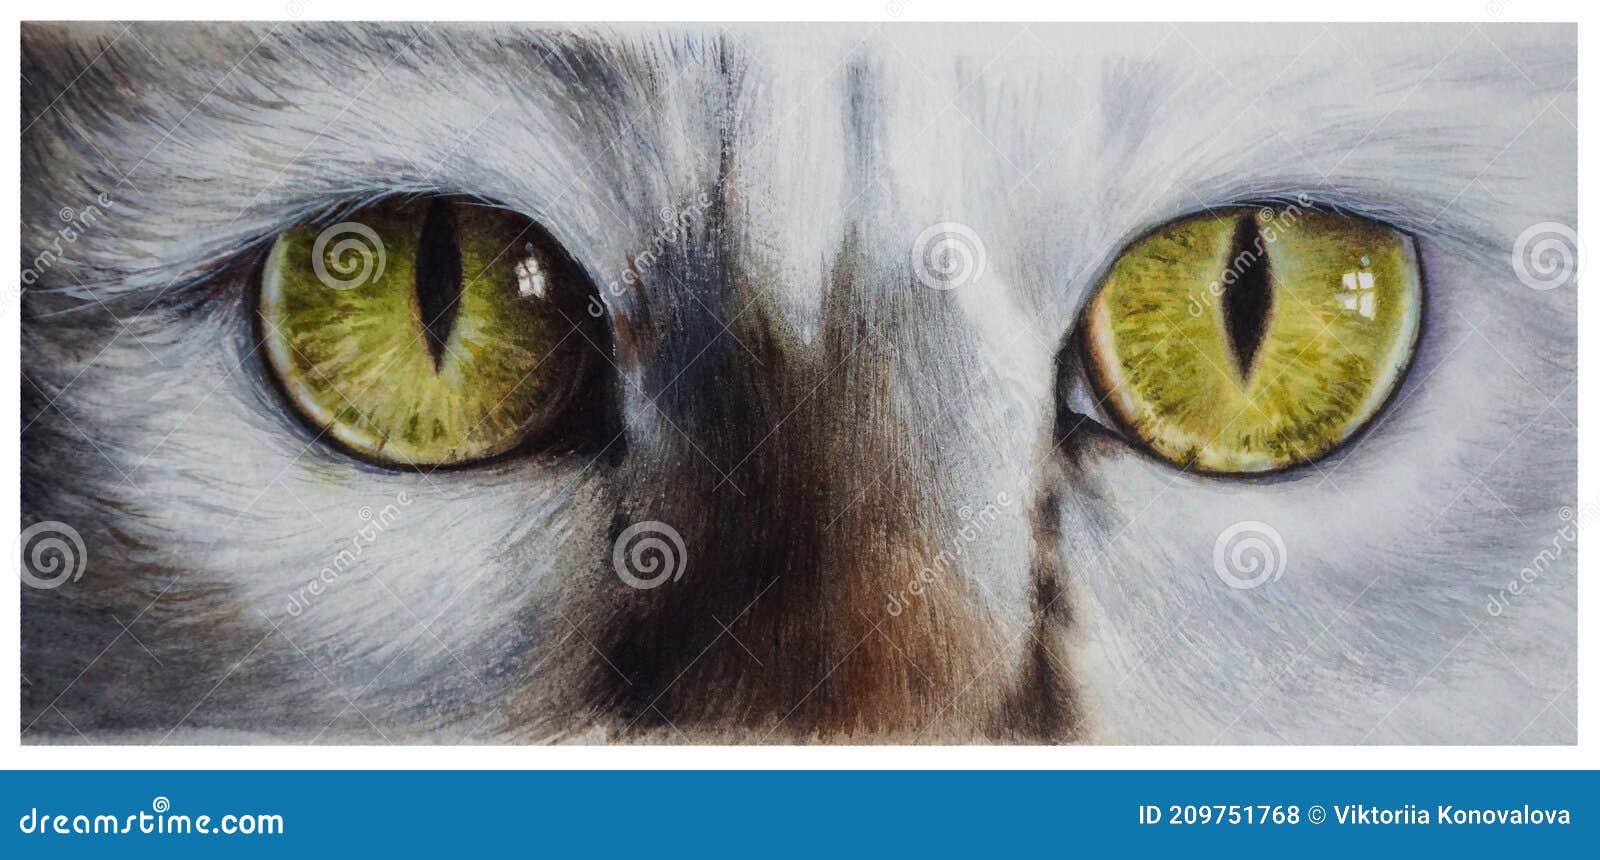 фанфик кошачьи глаза фото 73